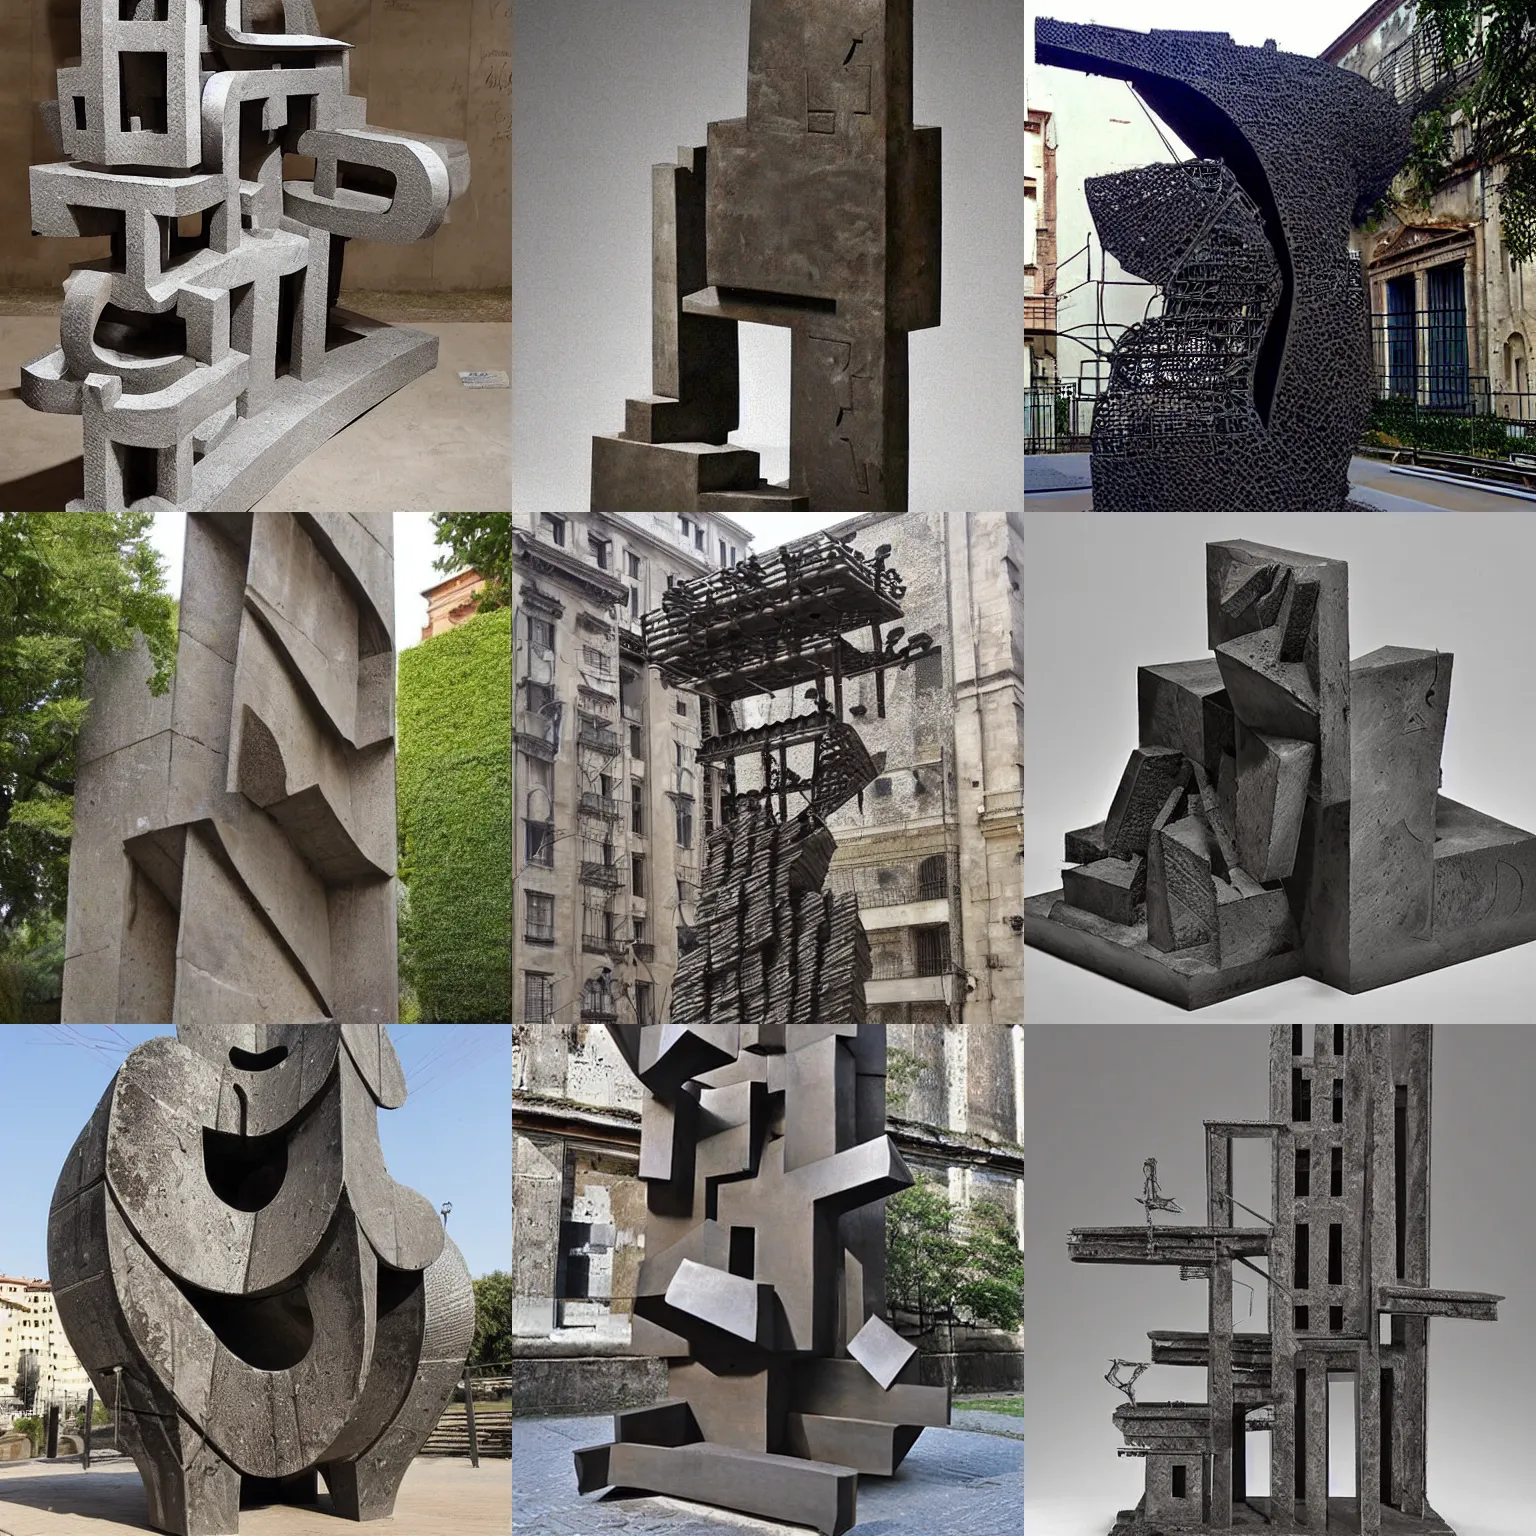 Prompt: Award-winning sculpture by ((((Eduardo Chillida and)))) Giovanni Battista Piranesi. Made of steel